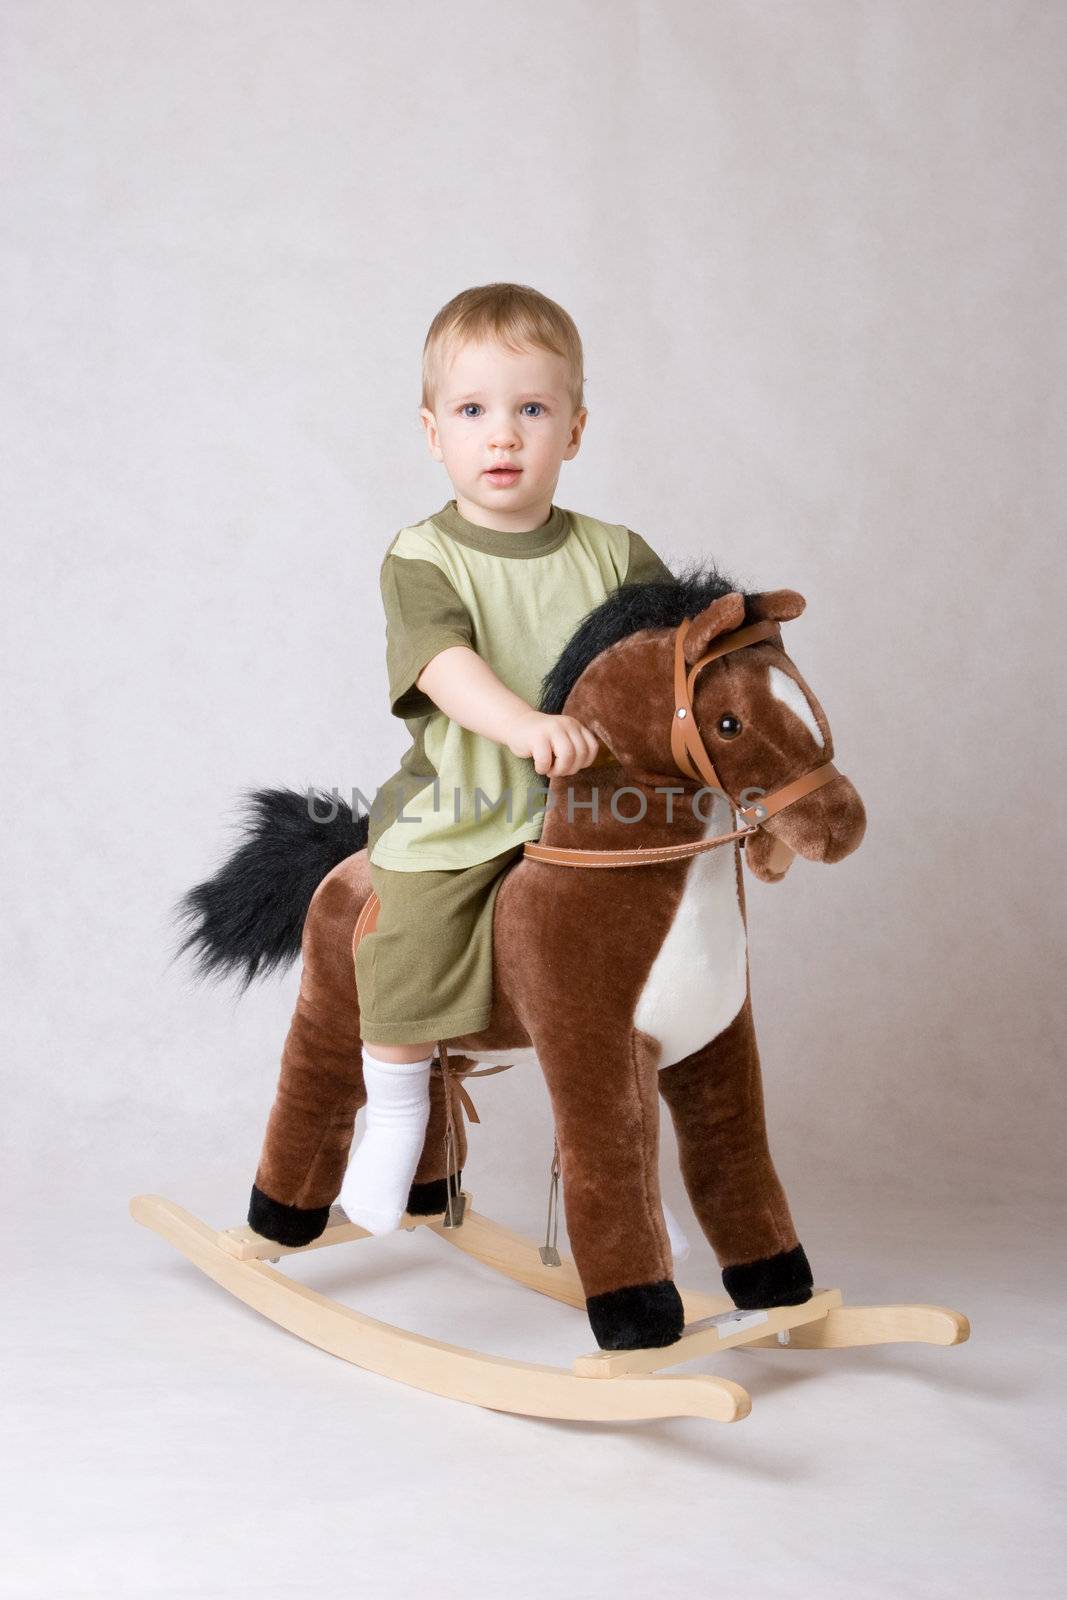 small boy riding a toy-horse